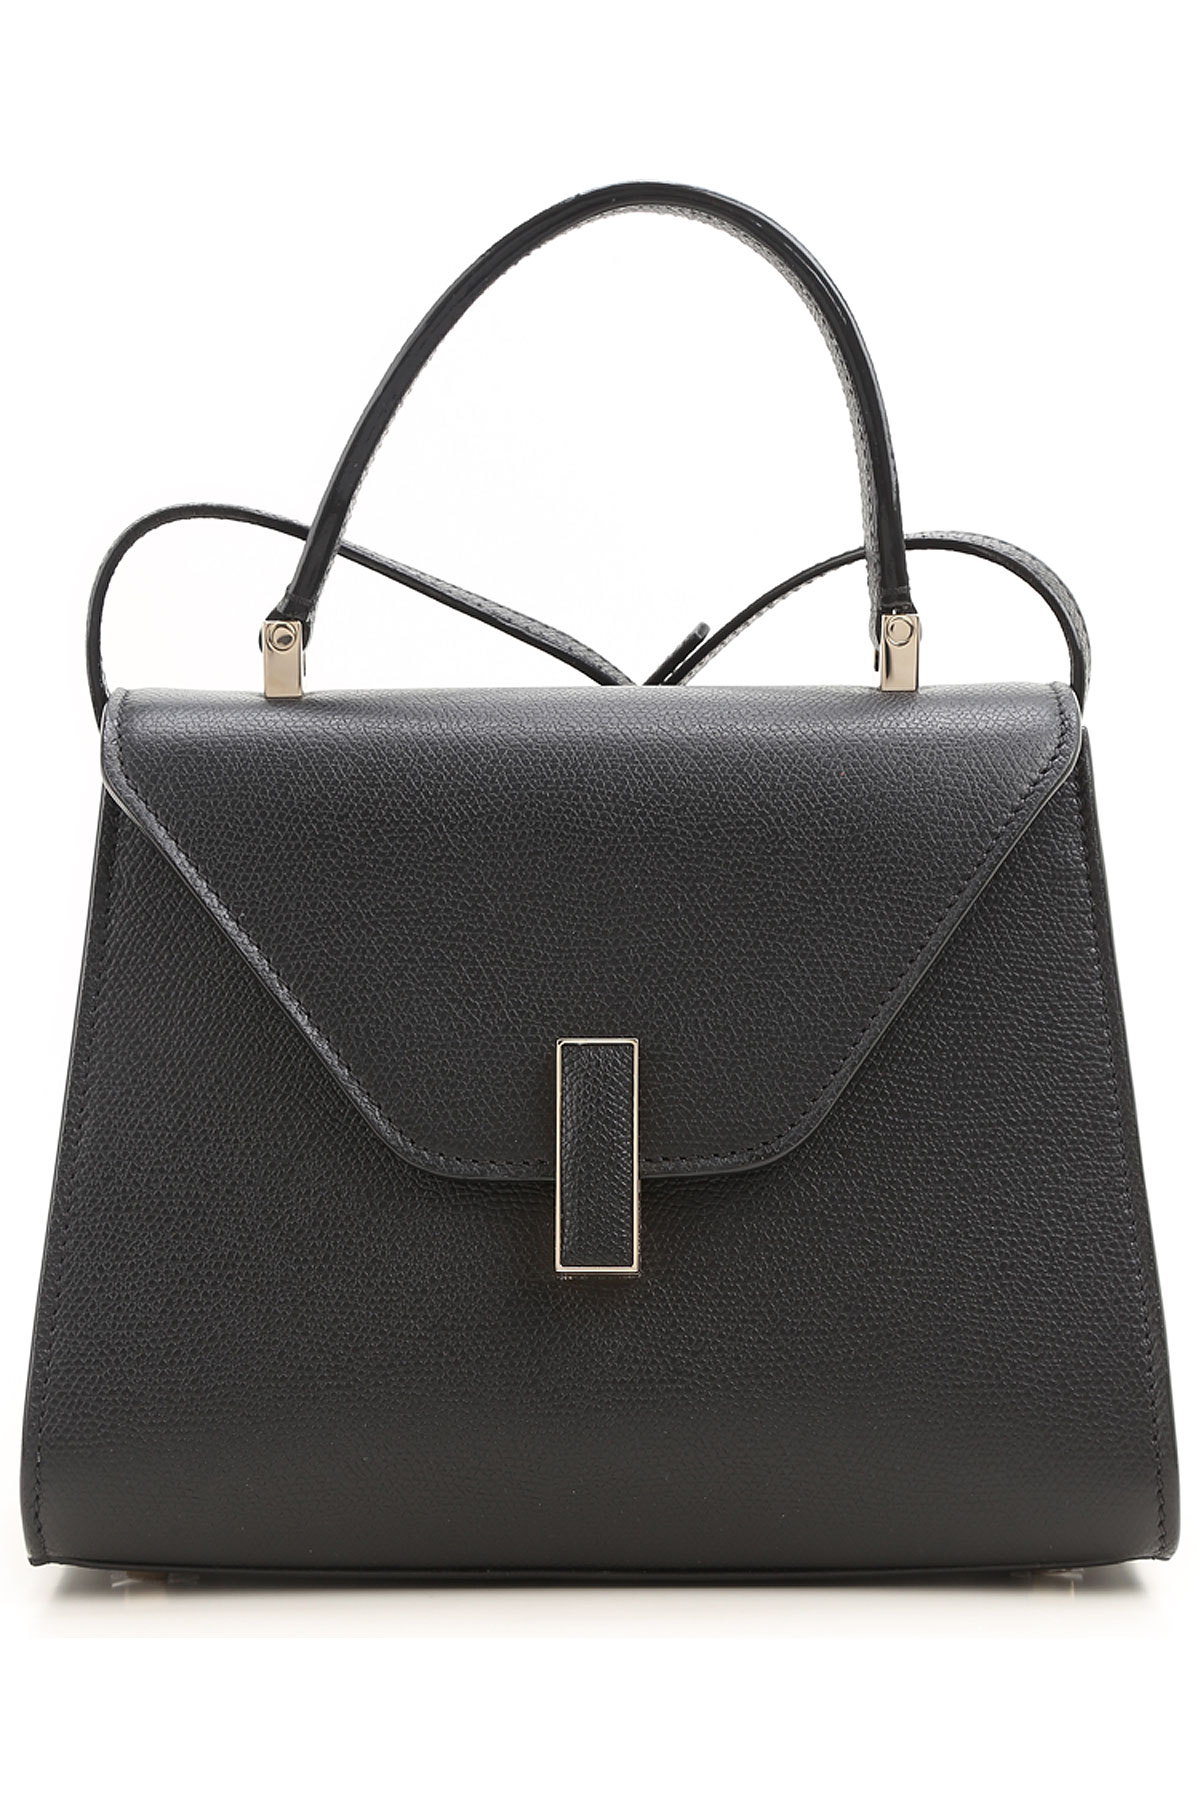 Handbags Valextra, Style code: v5e36-028000n-0c